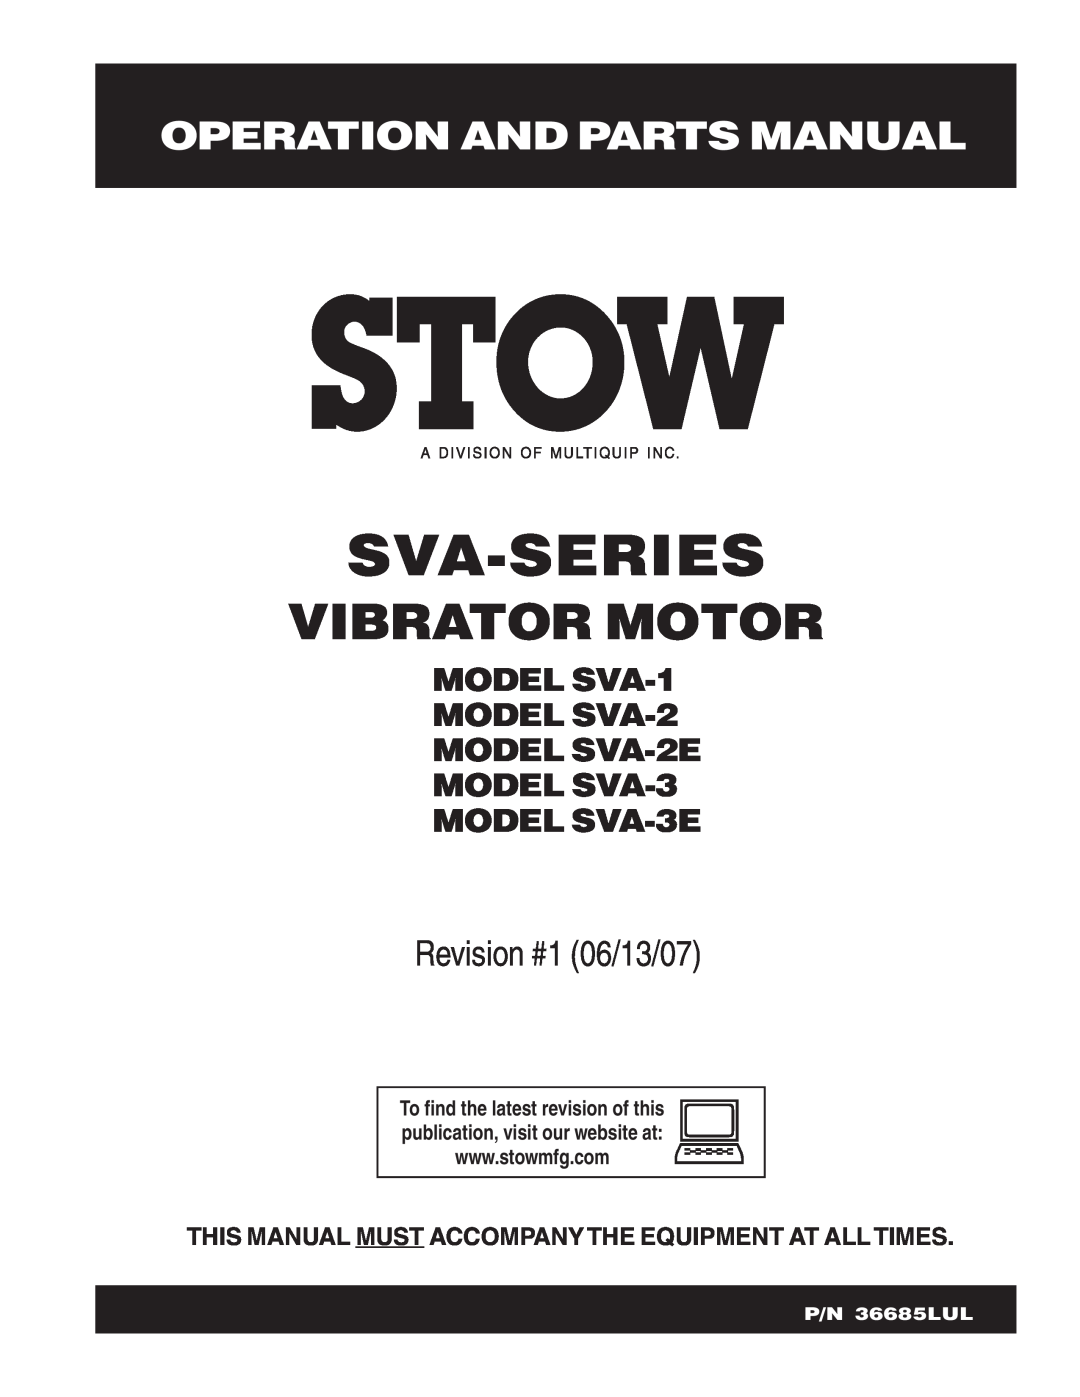 Stow SVA-3E, SVA-2E manual Operation And Parts Manual, Sva-Series, Vibrator Motor, Revision #1 06/13/07, P/N 36685LUL 